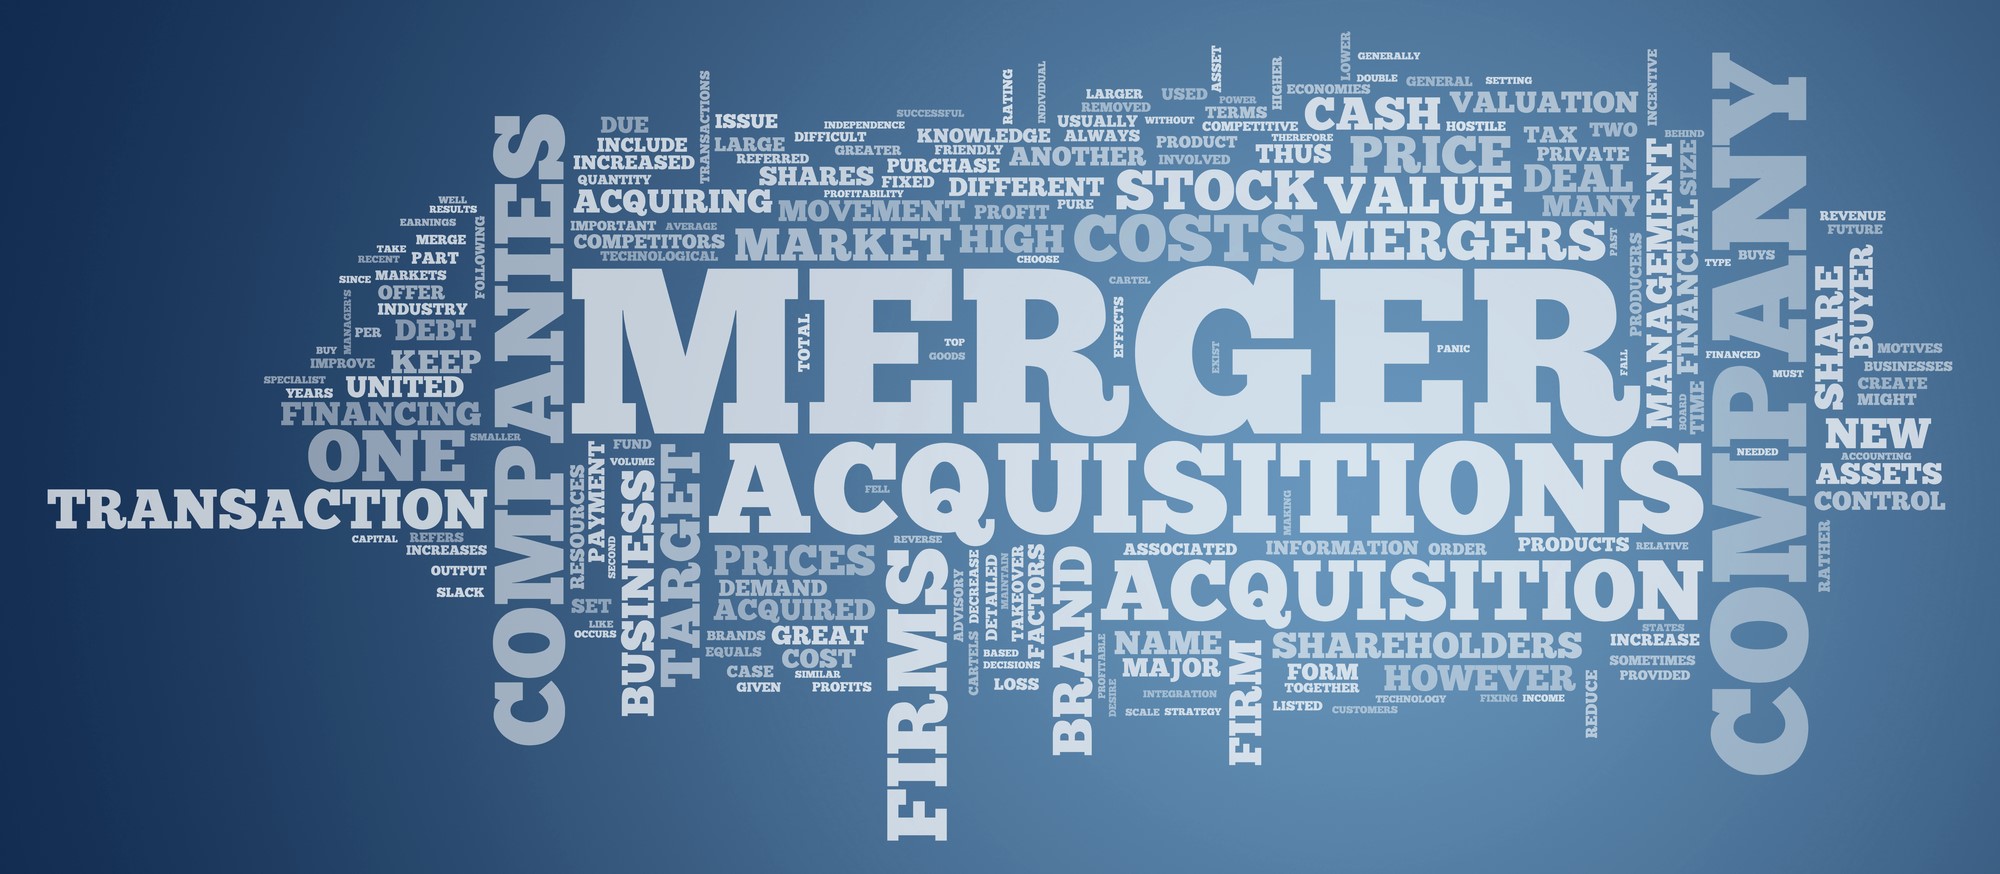 merger & acquisitions